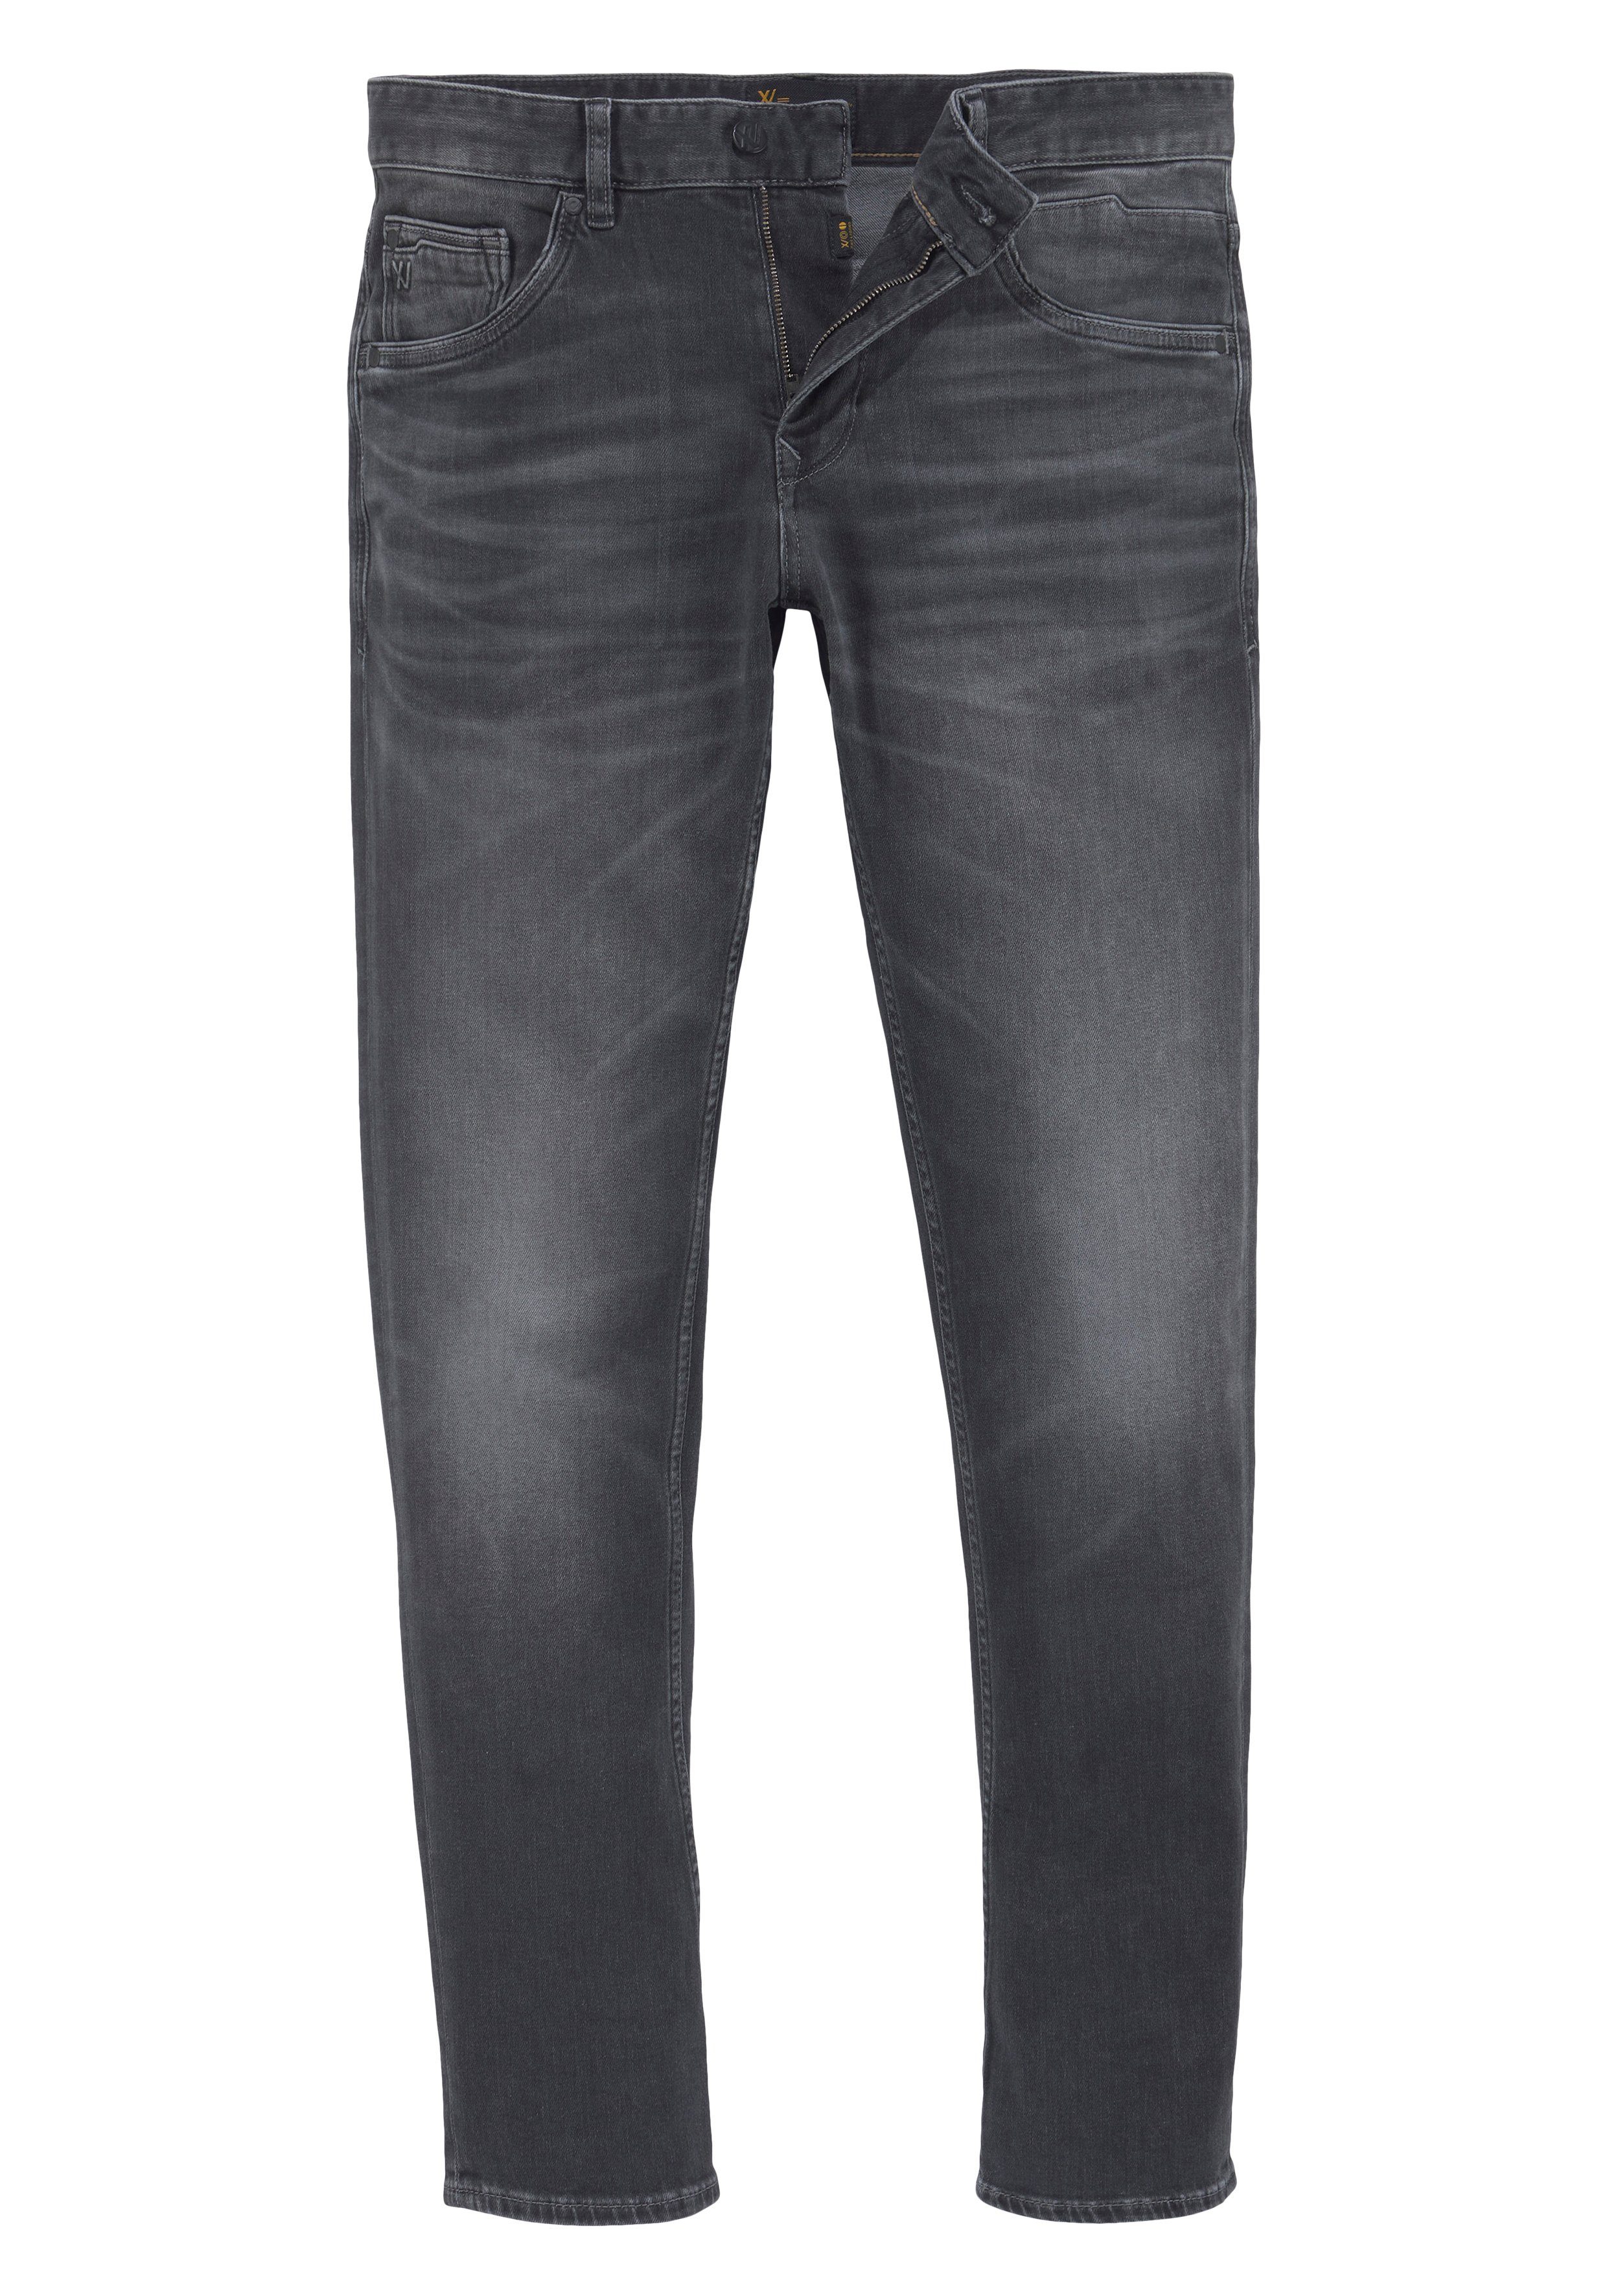 Direktshop echt! PME LEGEND Slim-fit-Jeans XV grey washed Denim denim Legend